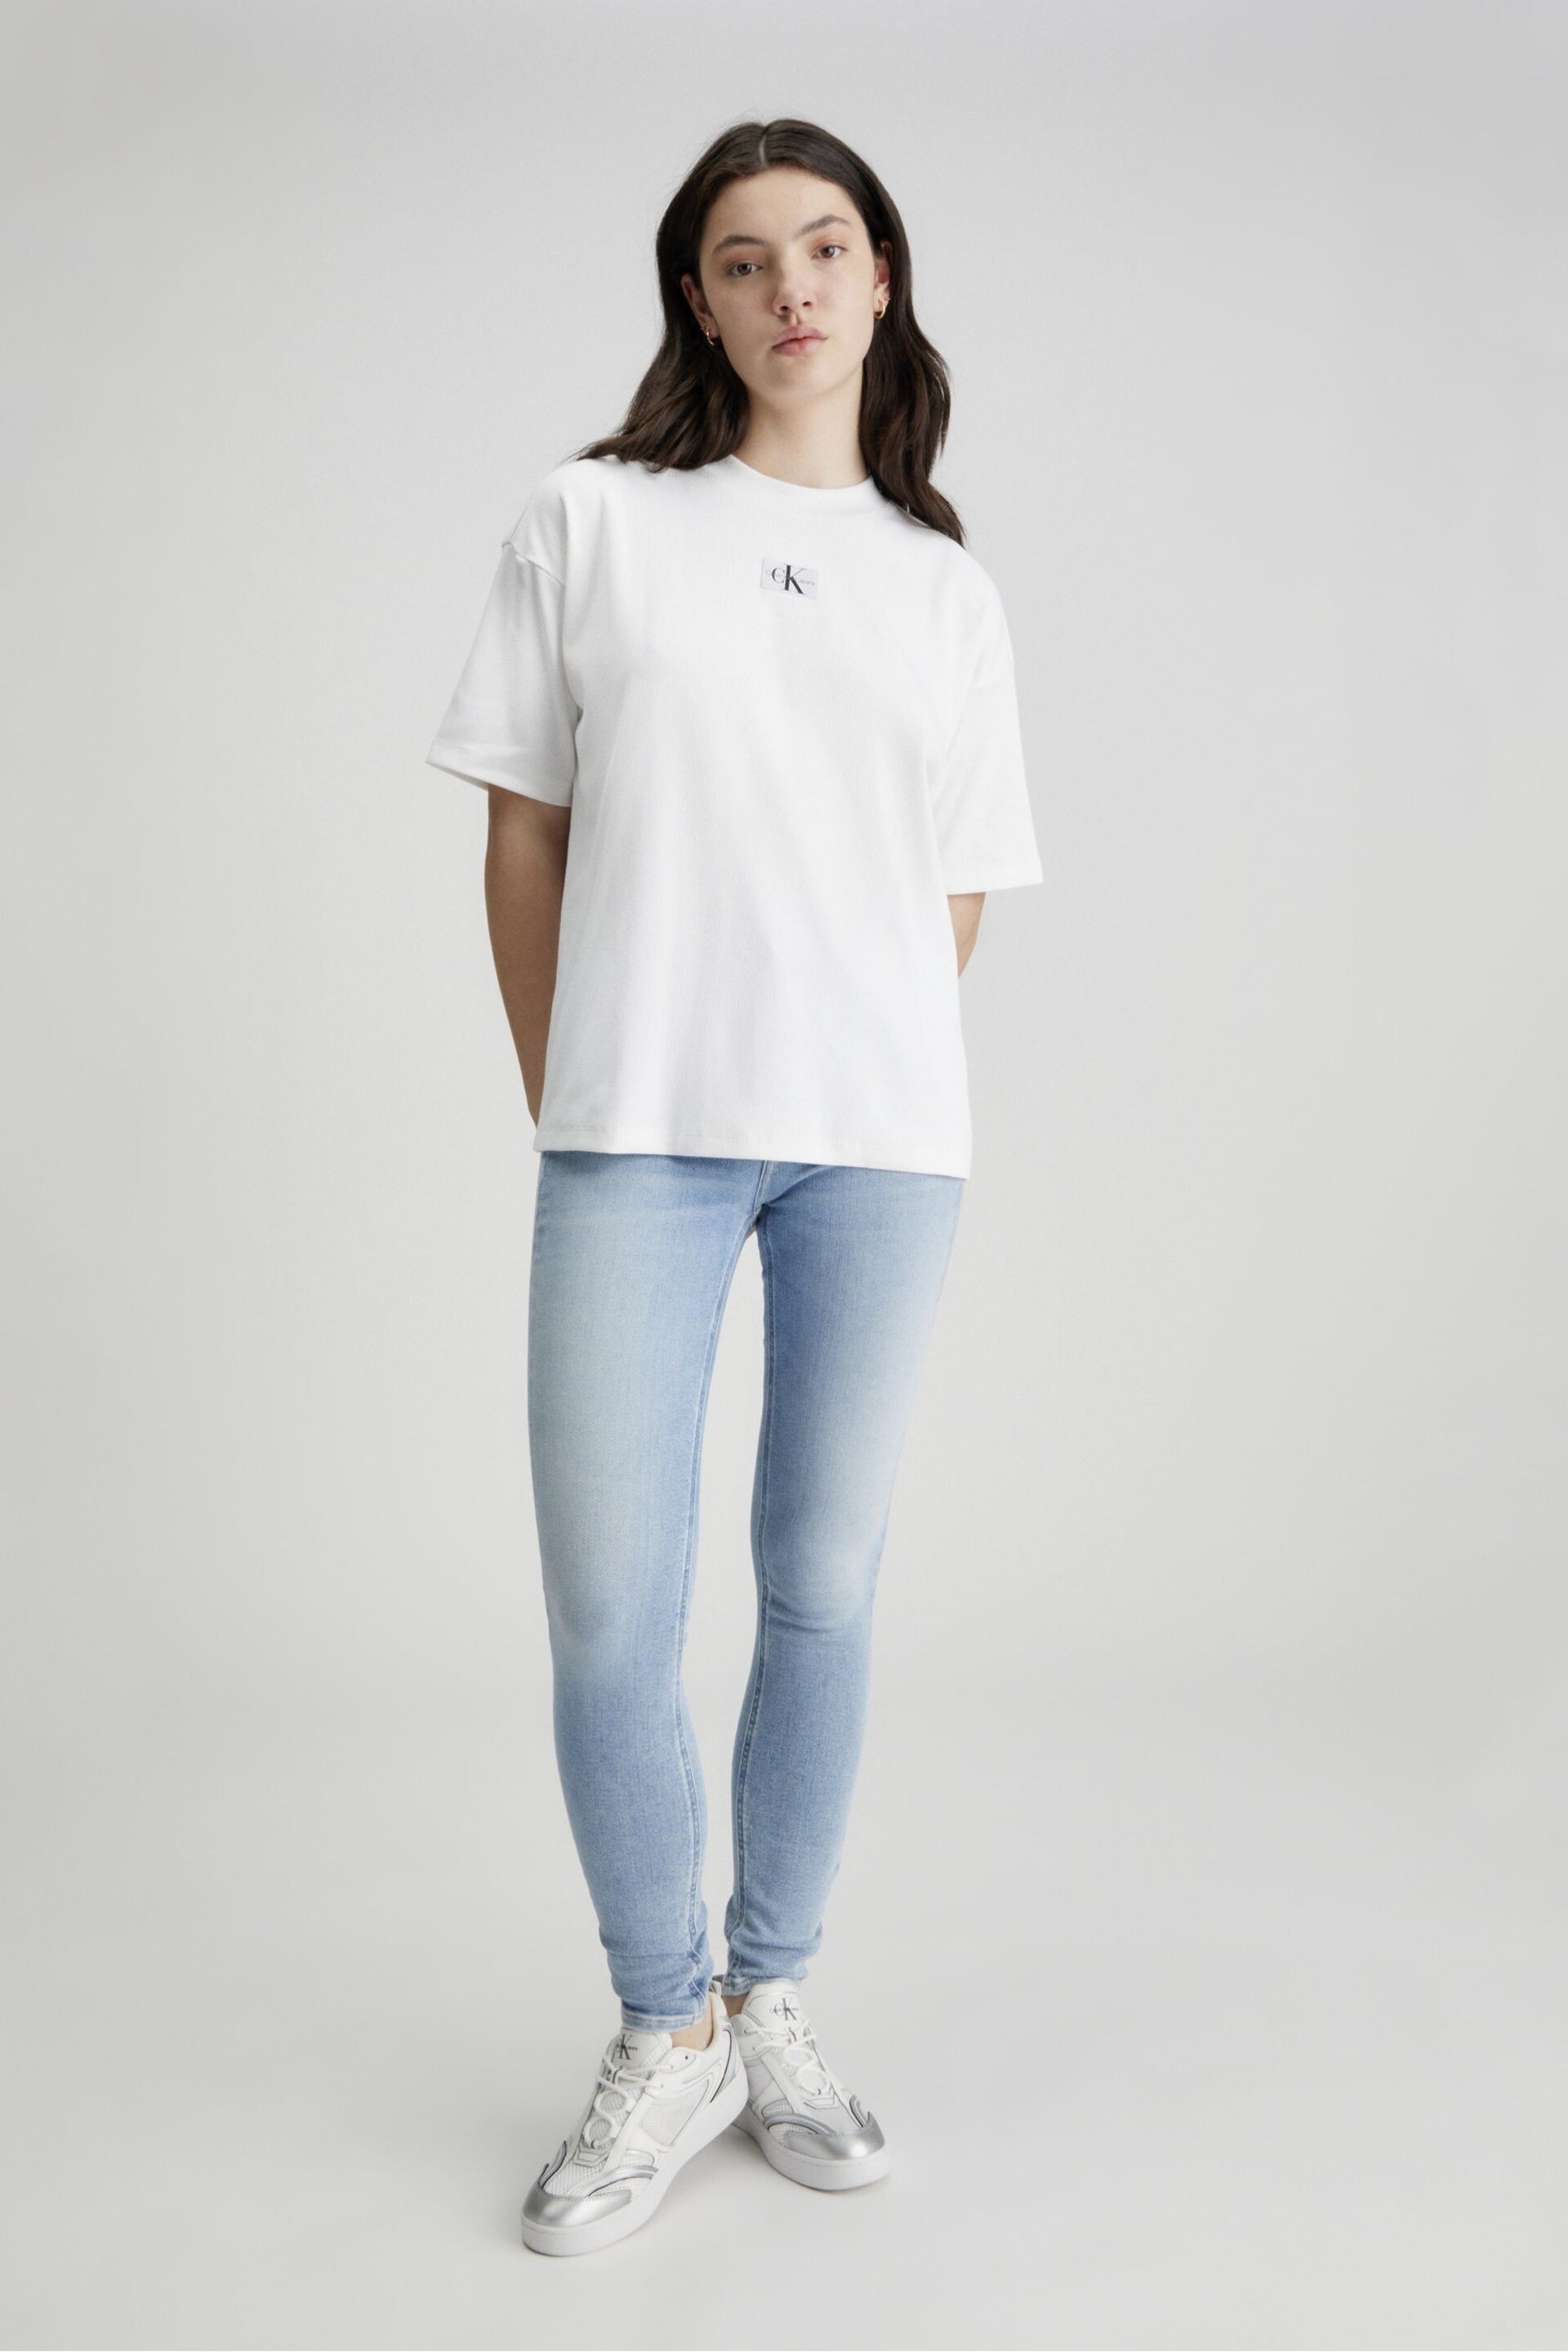 Calvin Klein White Boyfriend Label Rib T-Shirt - Image 1 of 4